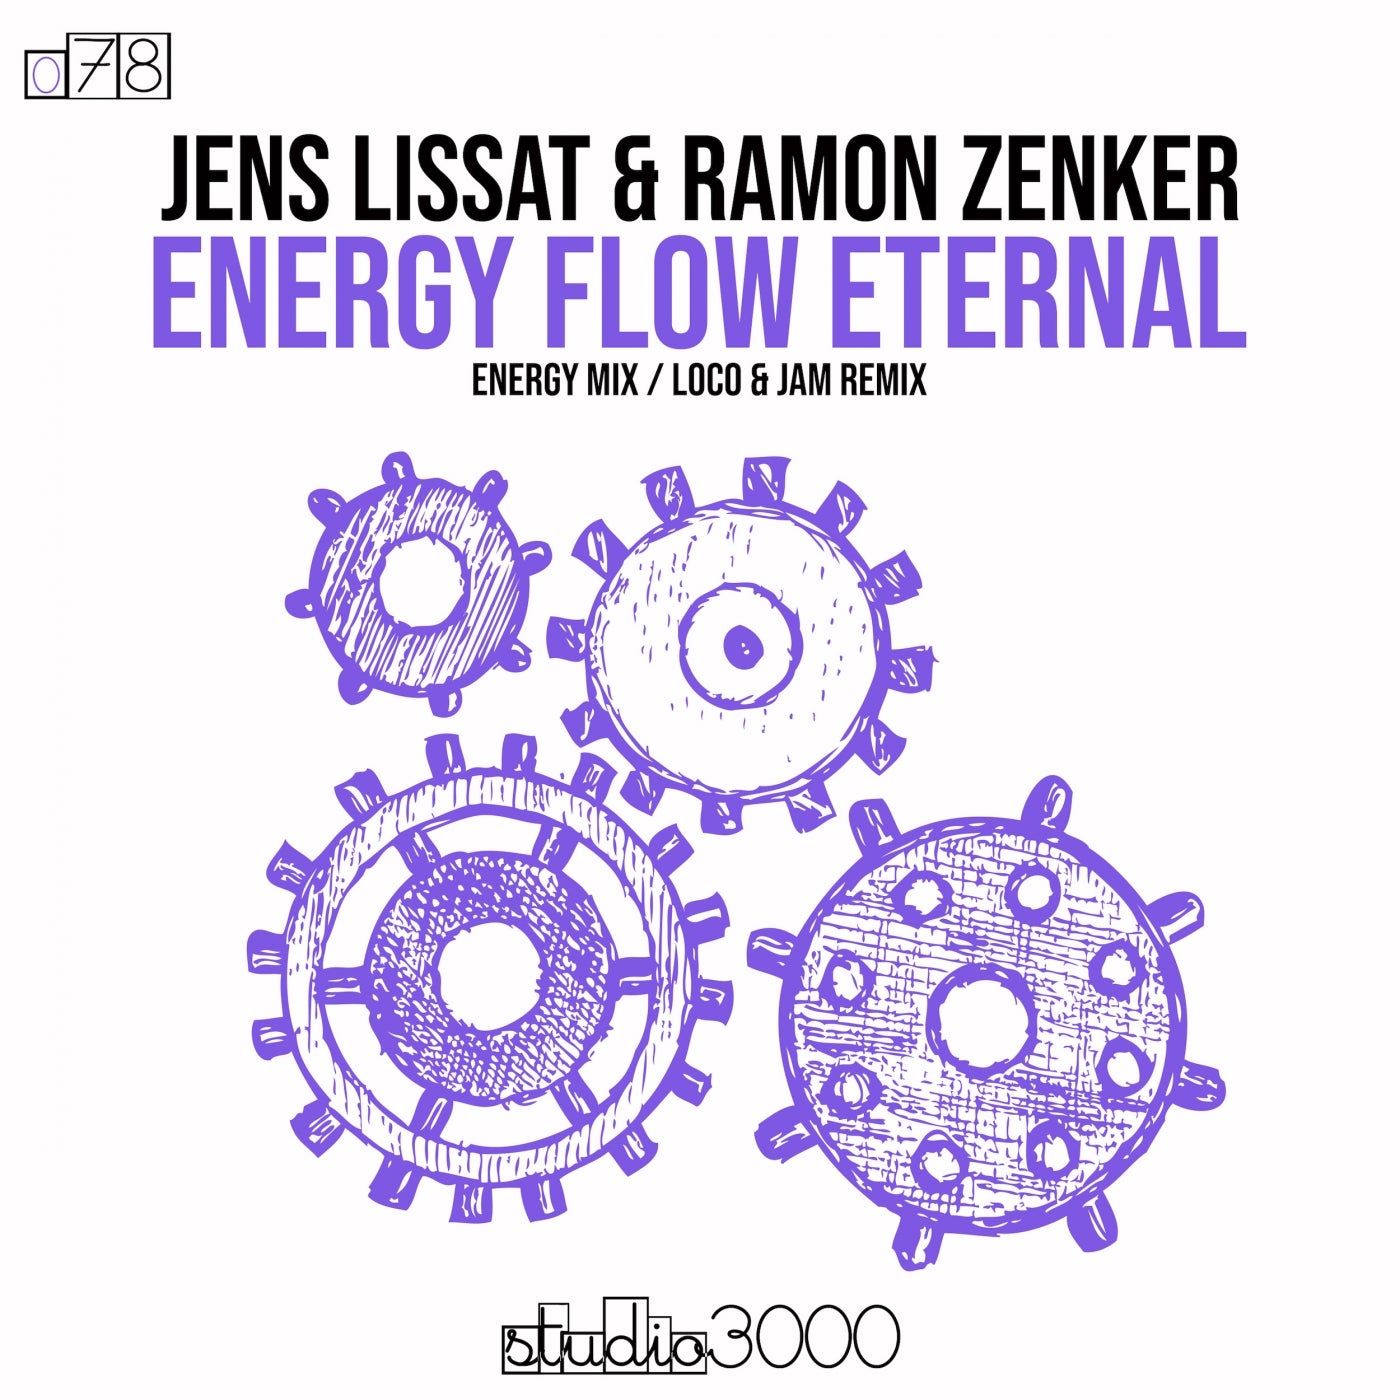 Energy Flow Eternal